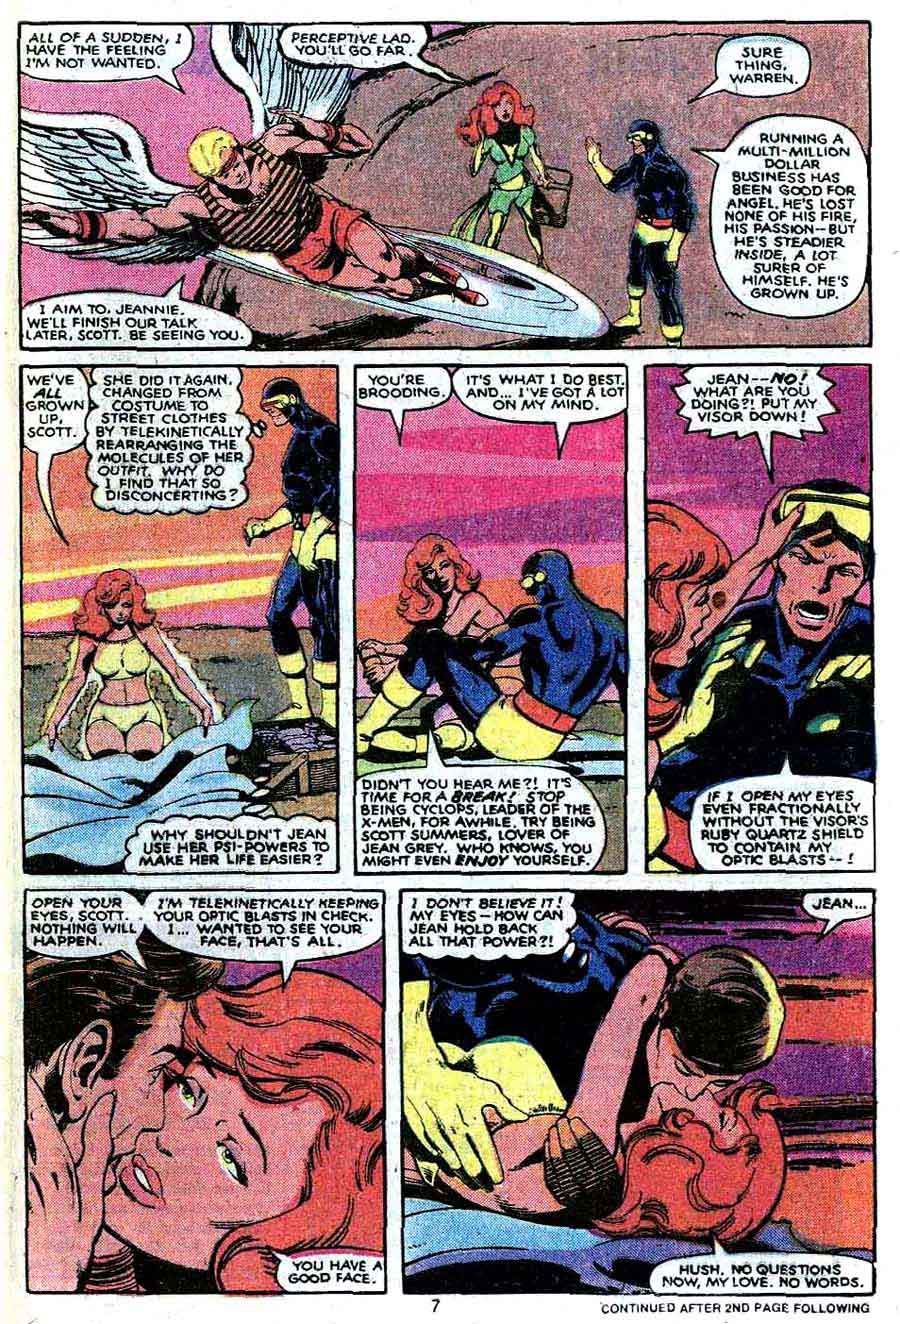 X-men v1 #132 marvel comic book page art by John Byrne